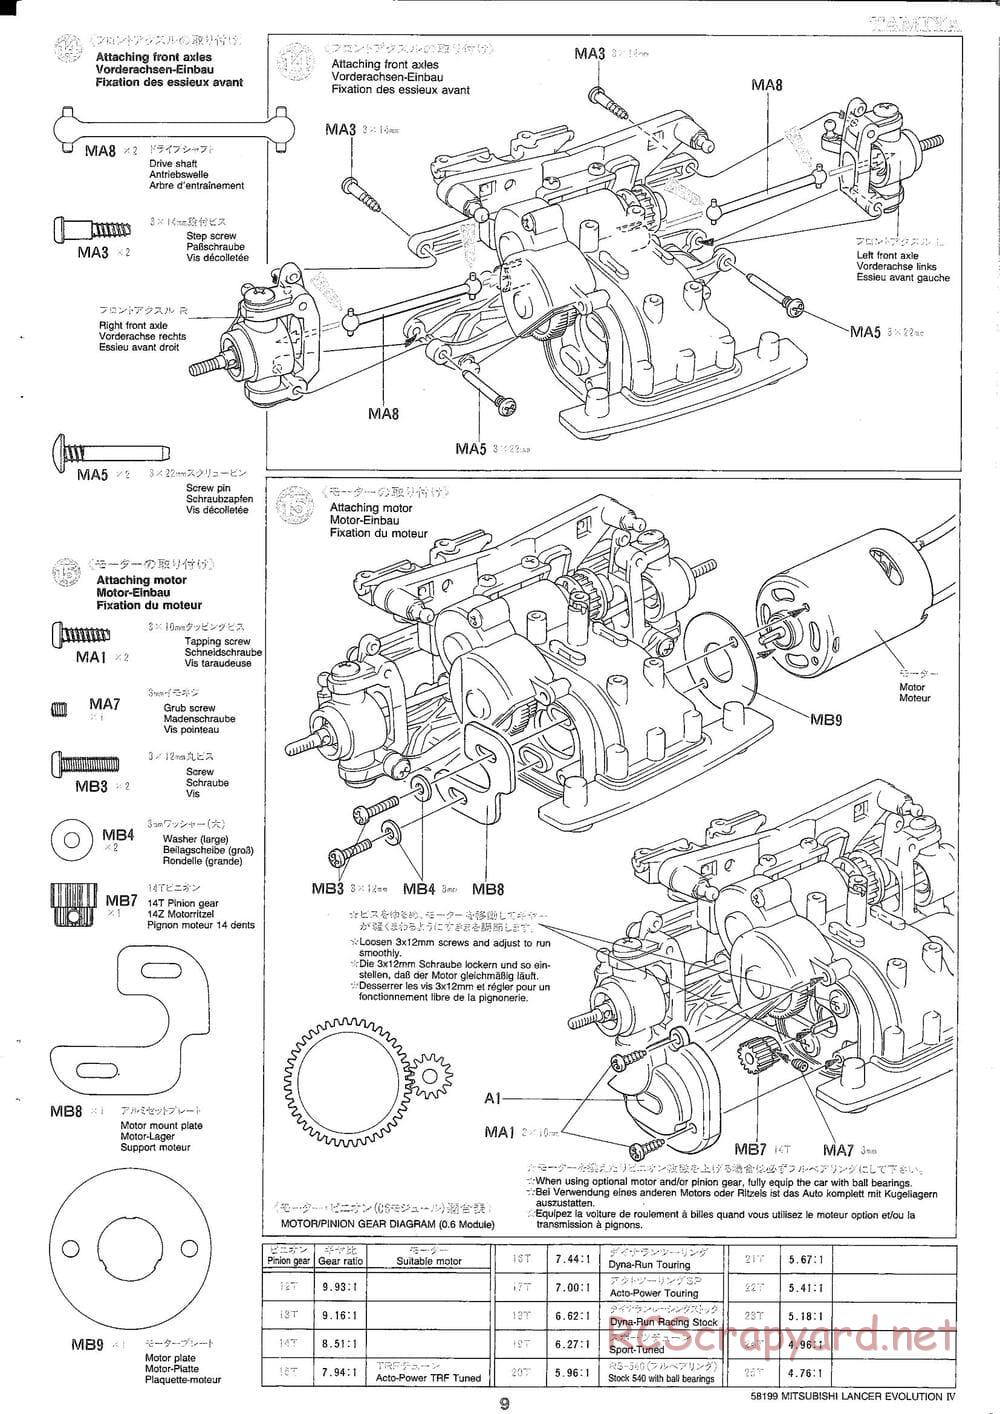 Tamiya - Mitsubishi Lancer Evolution IV - TA-03F Chassis - Manual - Page 9